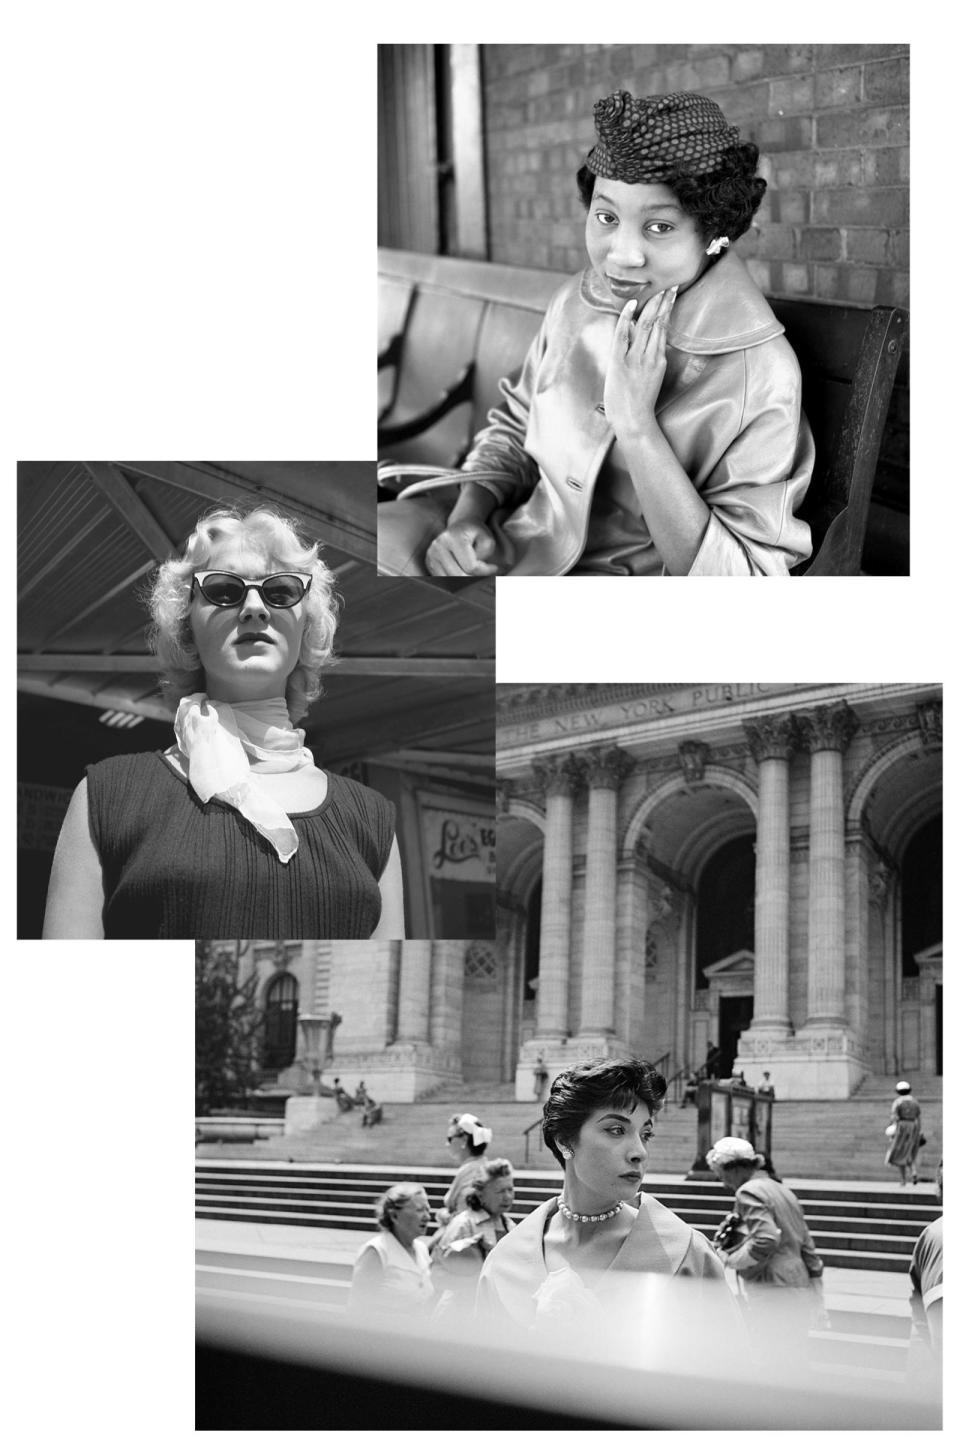 2009: Vivian Maier's Work Goes Public, Viral